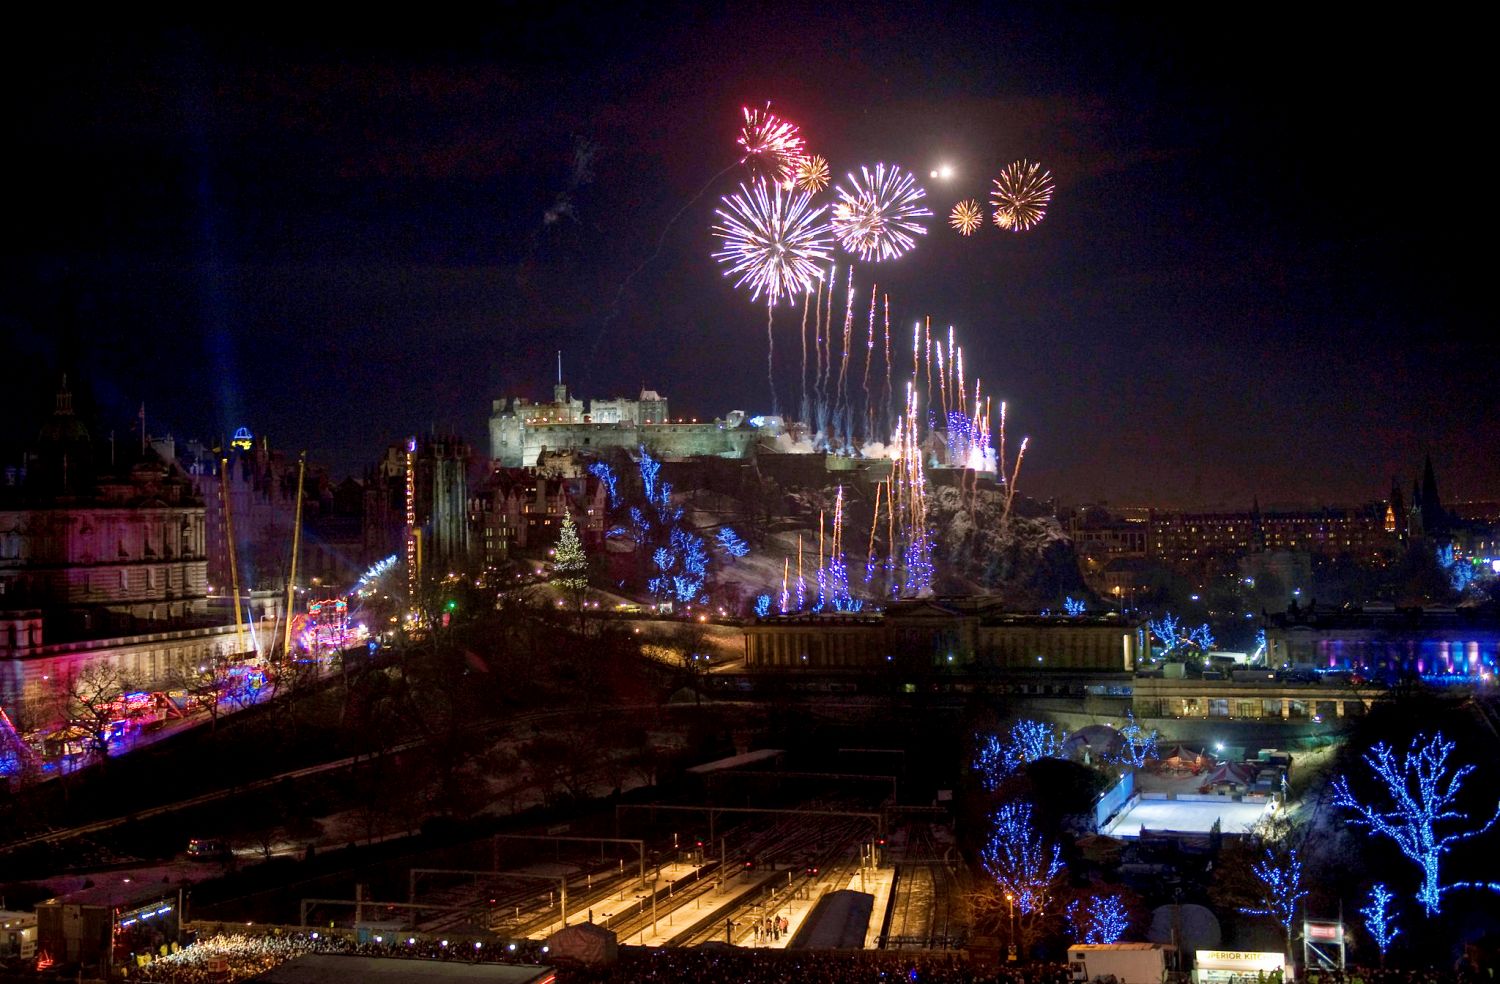 Edinburgh, Scotland - Hogmanay - New Year's Eve